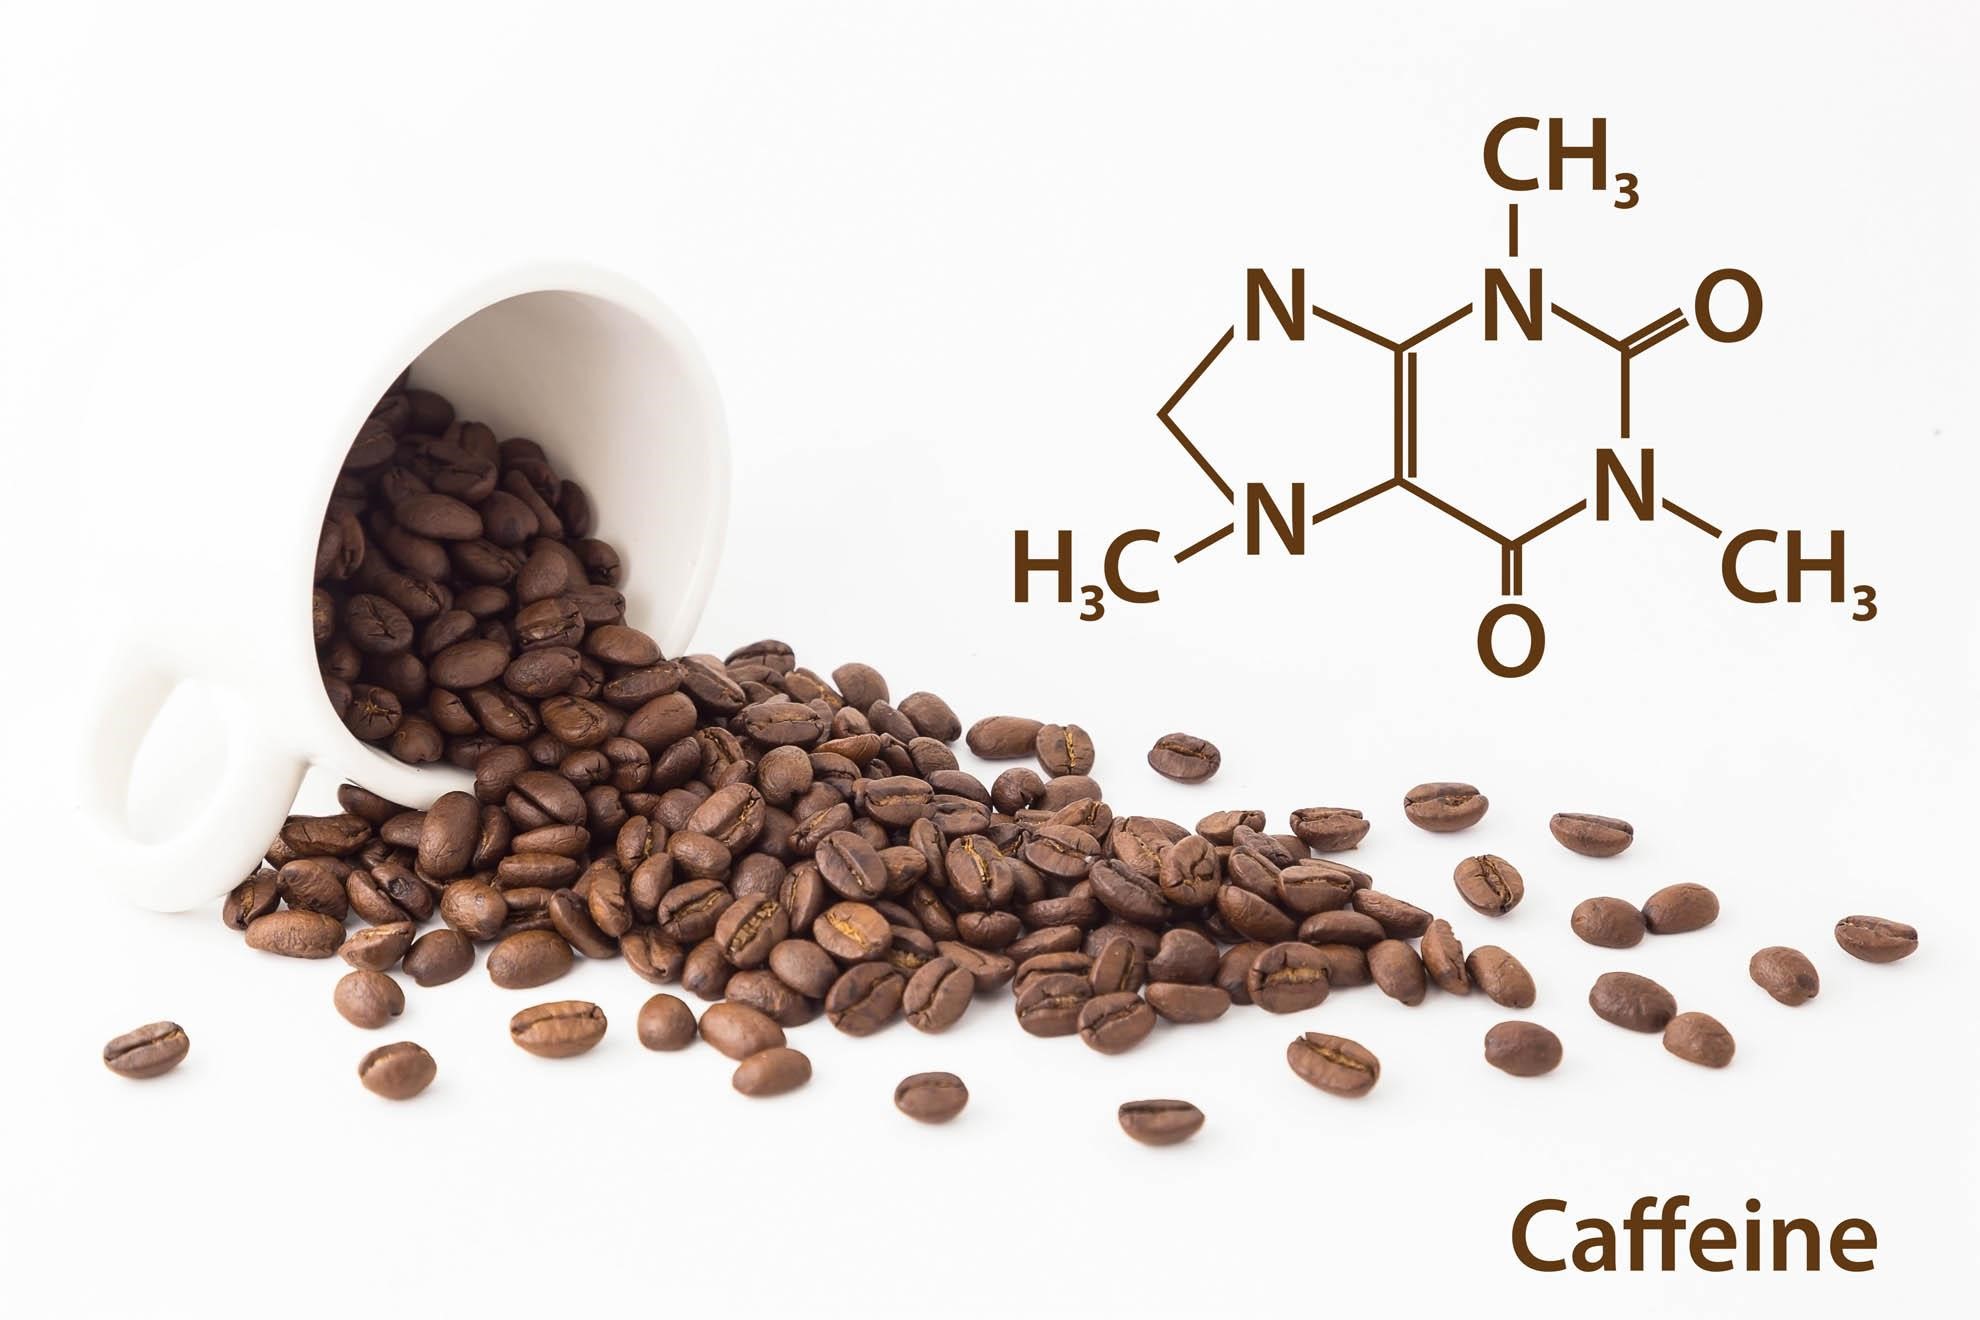 Caffeine in coffee